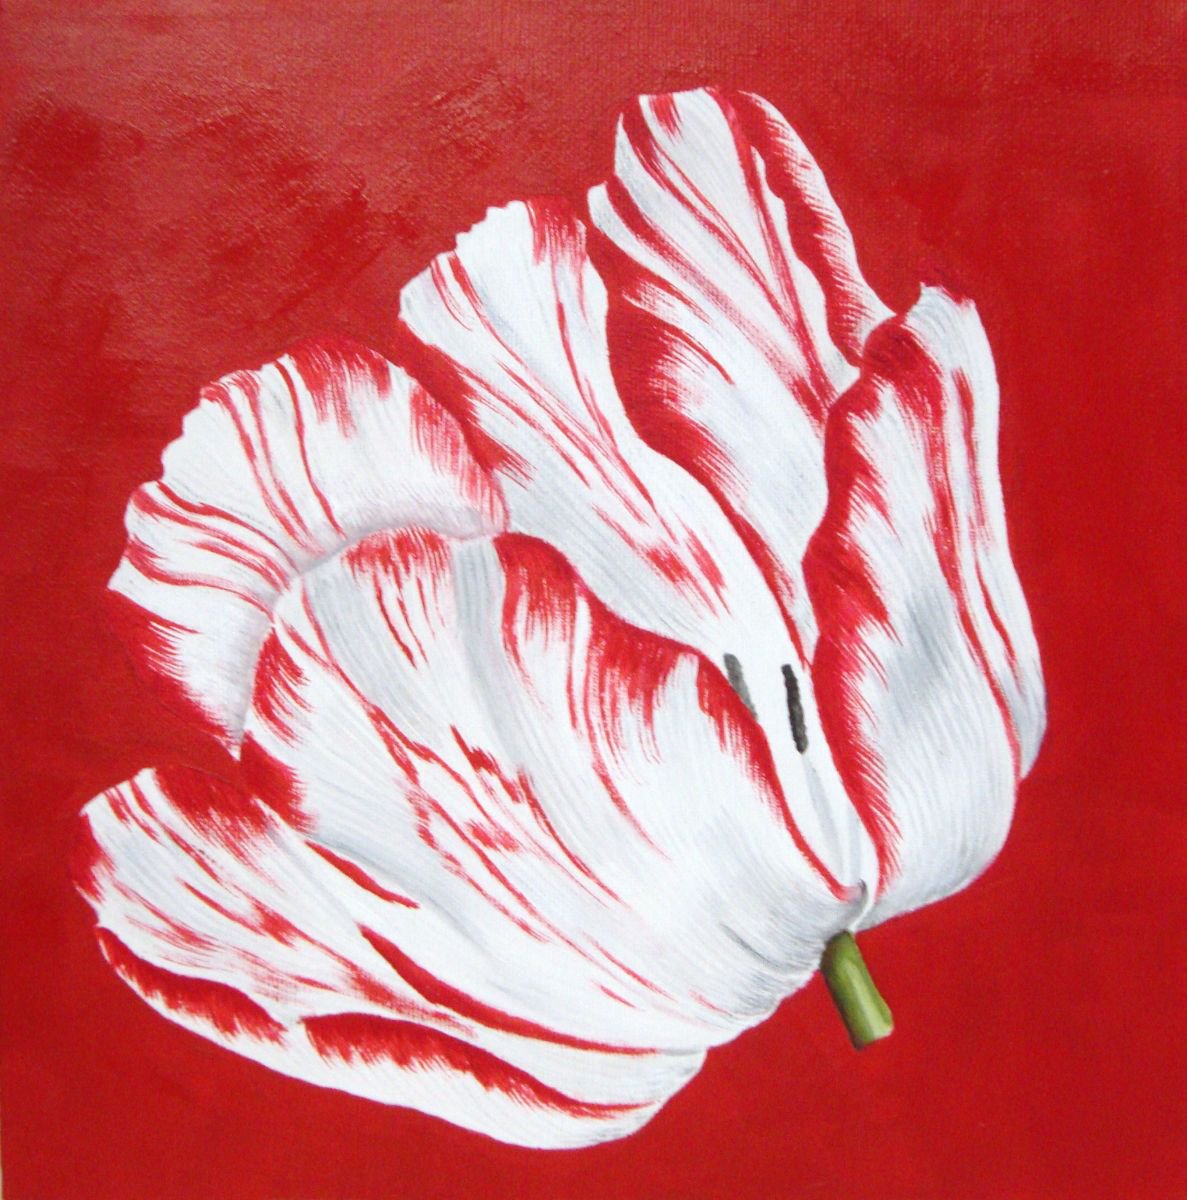 Red Tulip by Angela Stanbridge